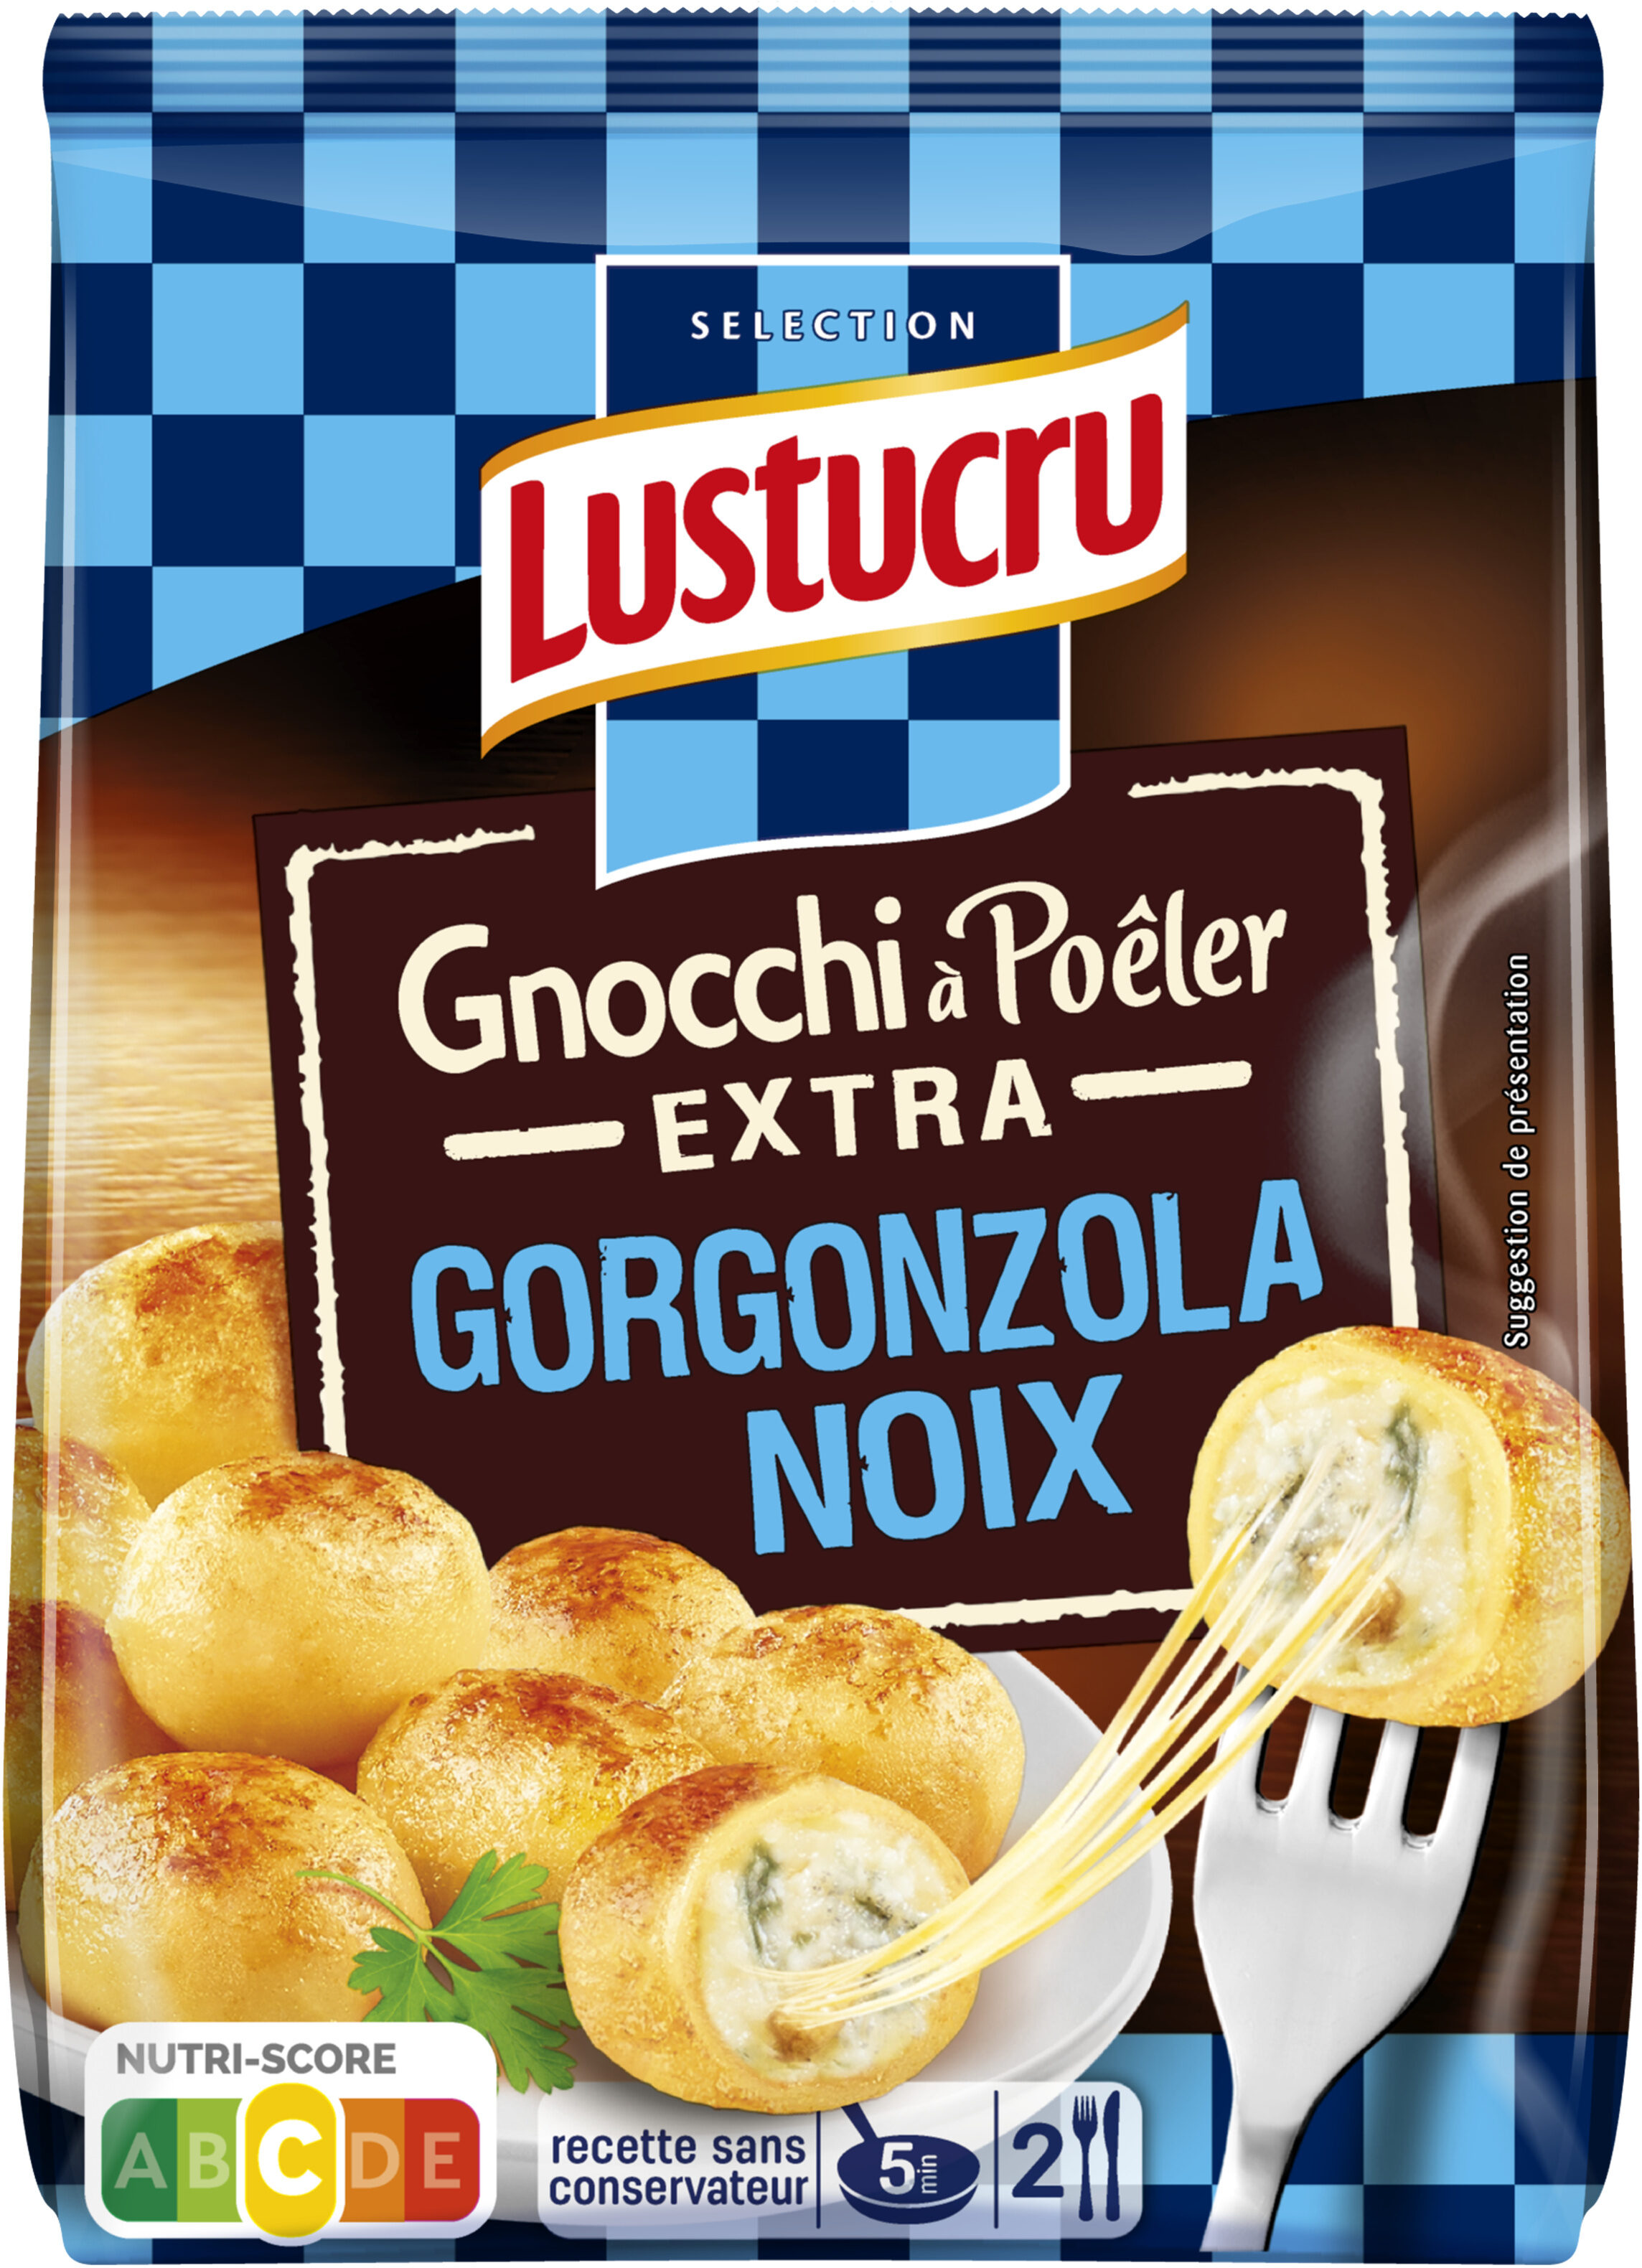 Lustucru gnocchi a poeler gorgonzola noix 280g - Produit